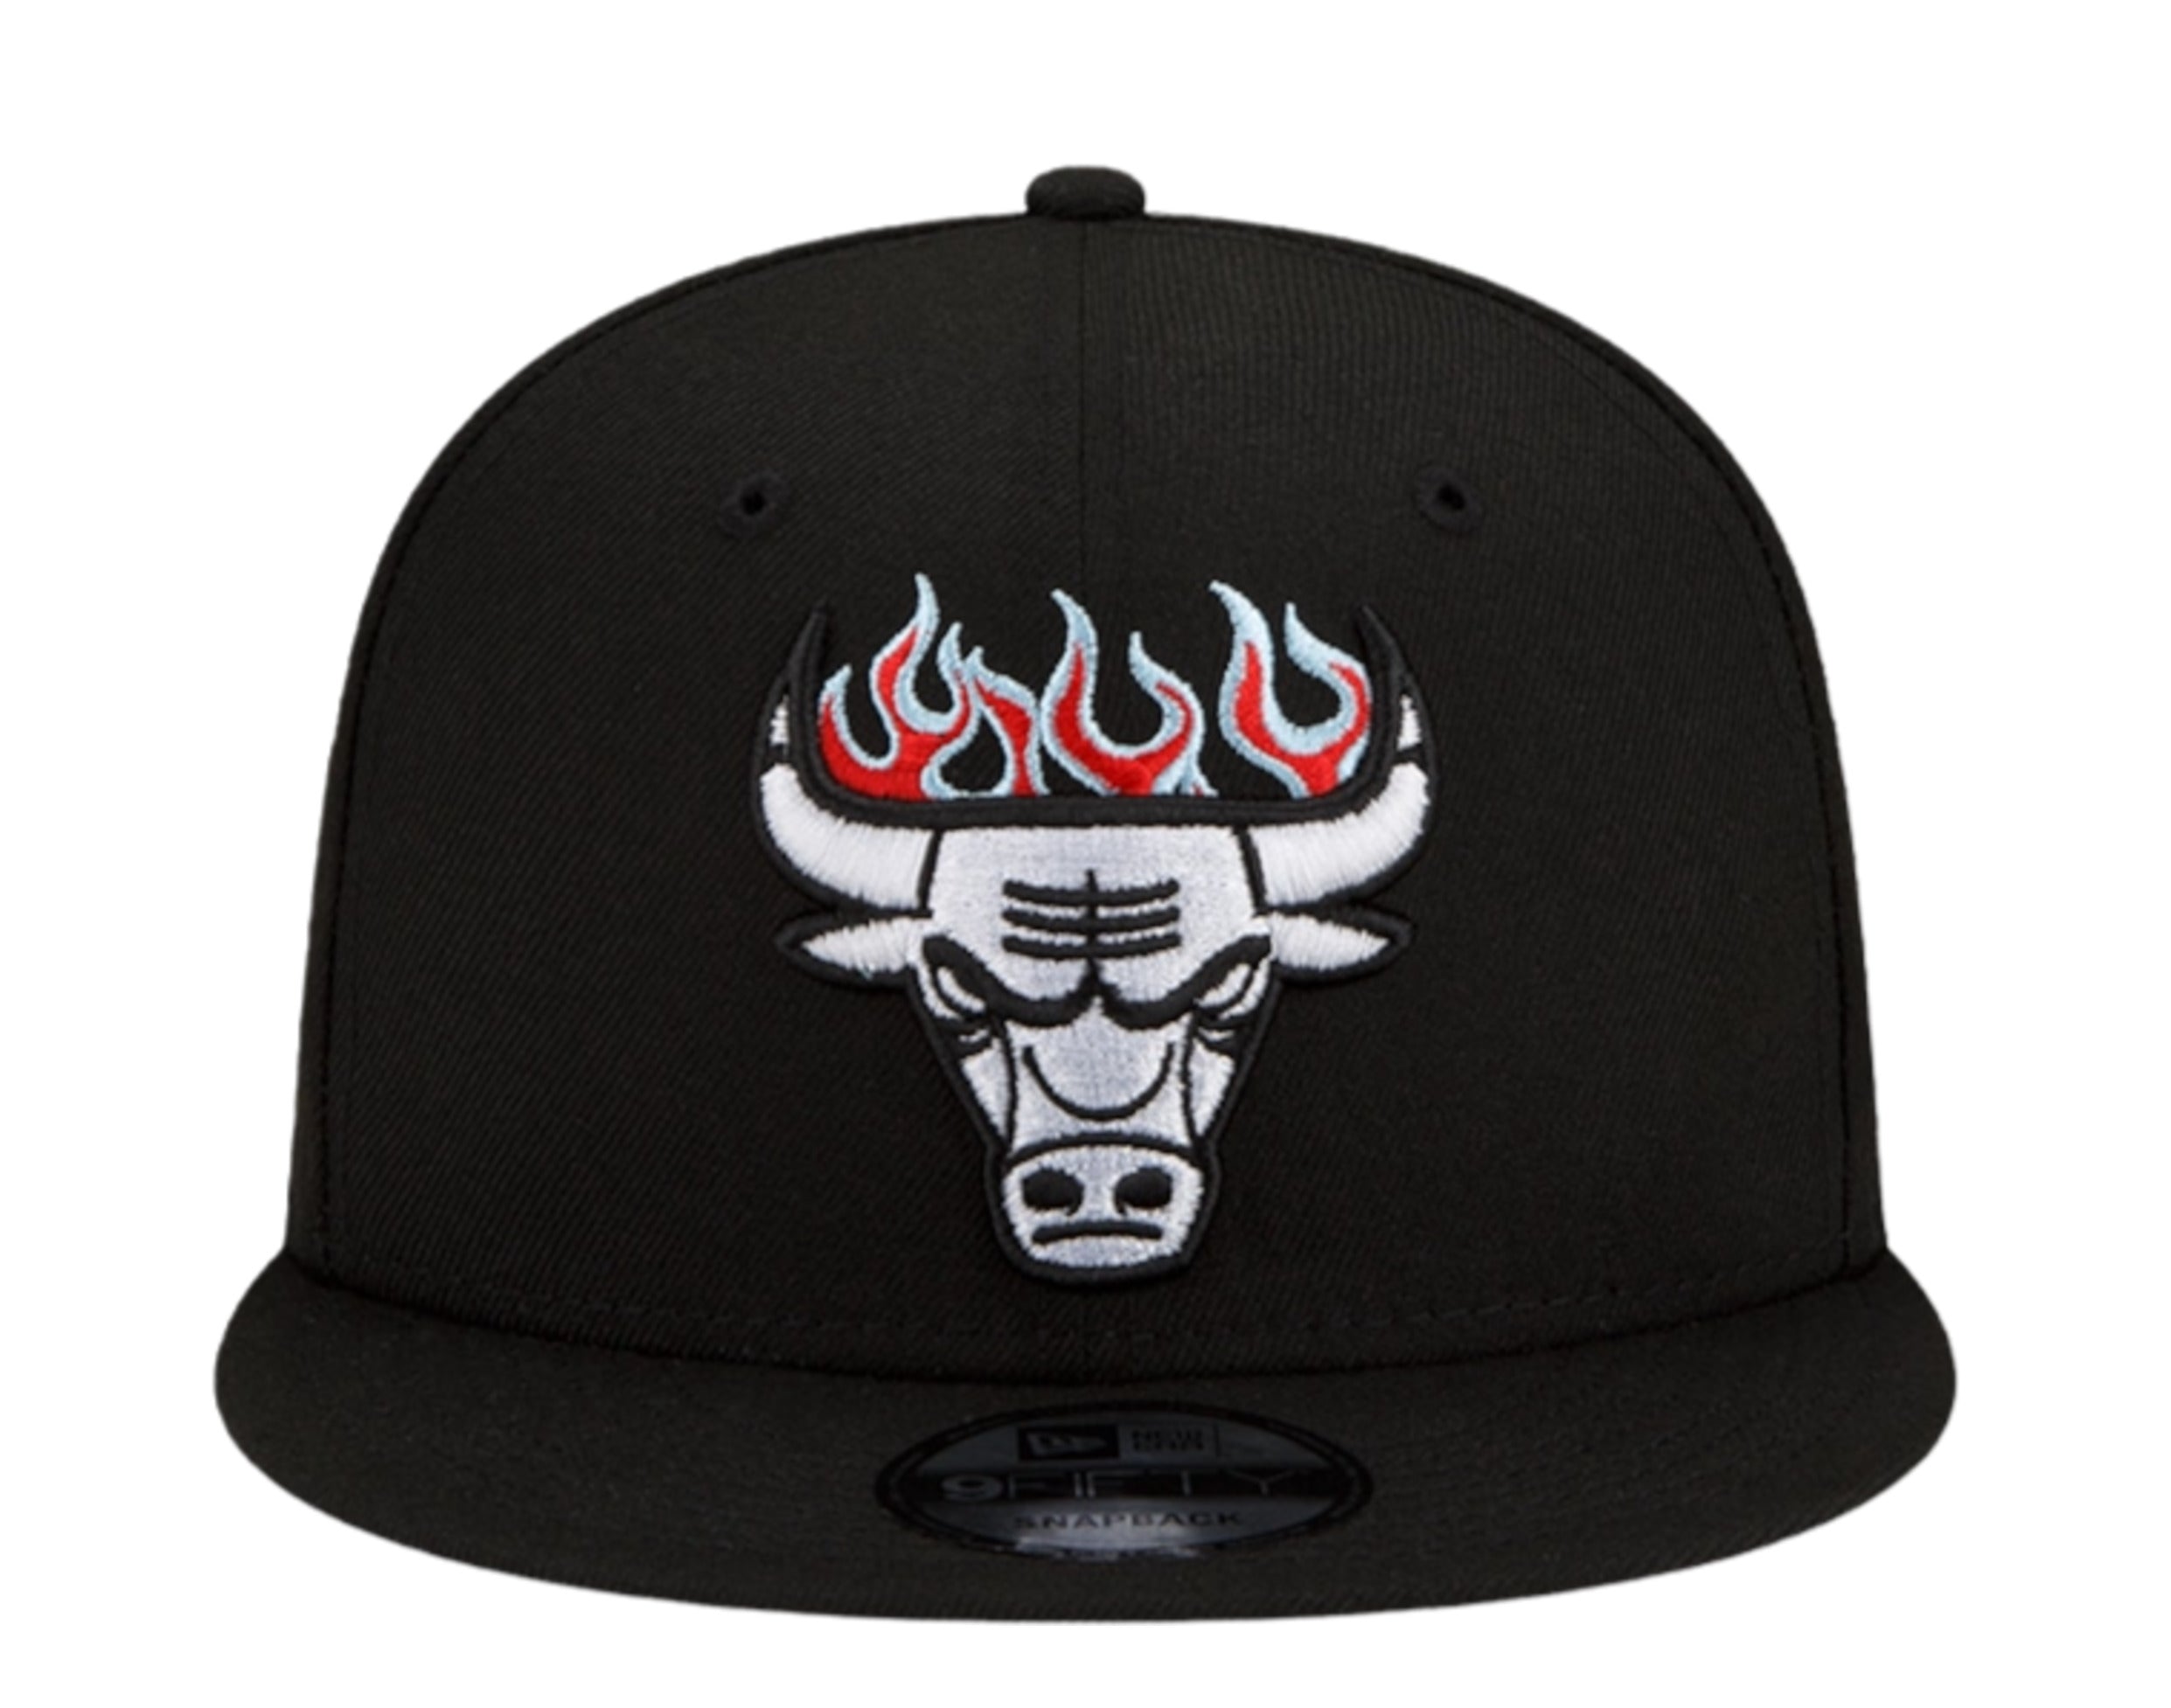 New Era Chicago Bulls NBA Basic 9FIFTY Snapback Hat